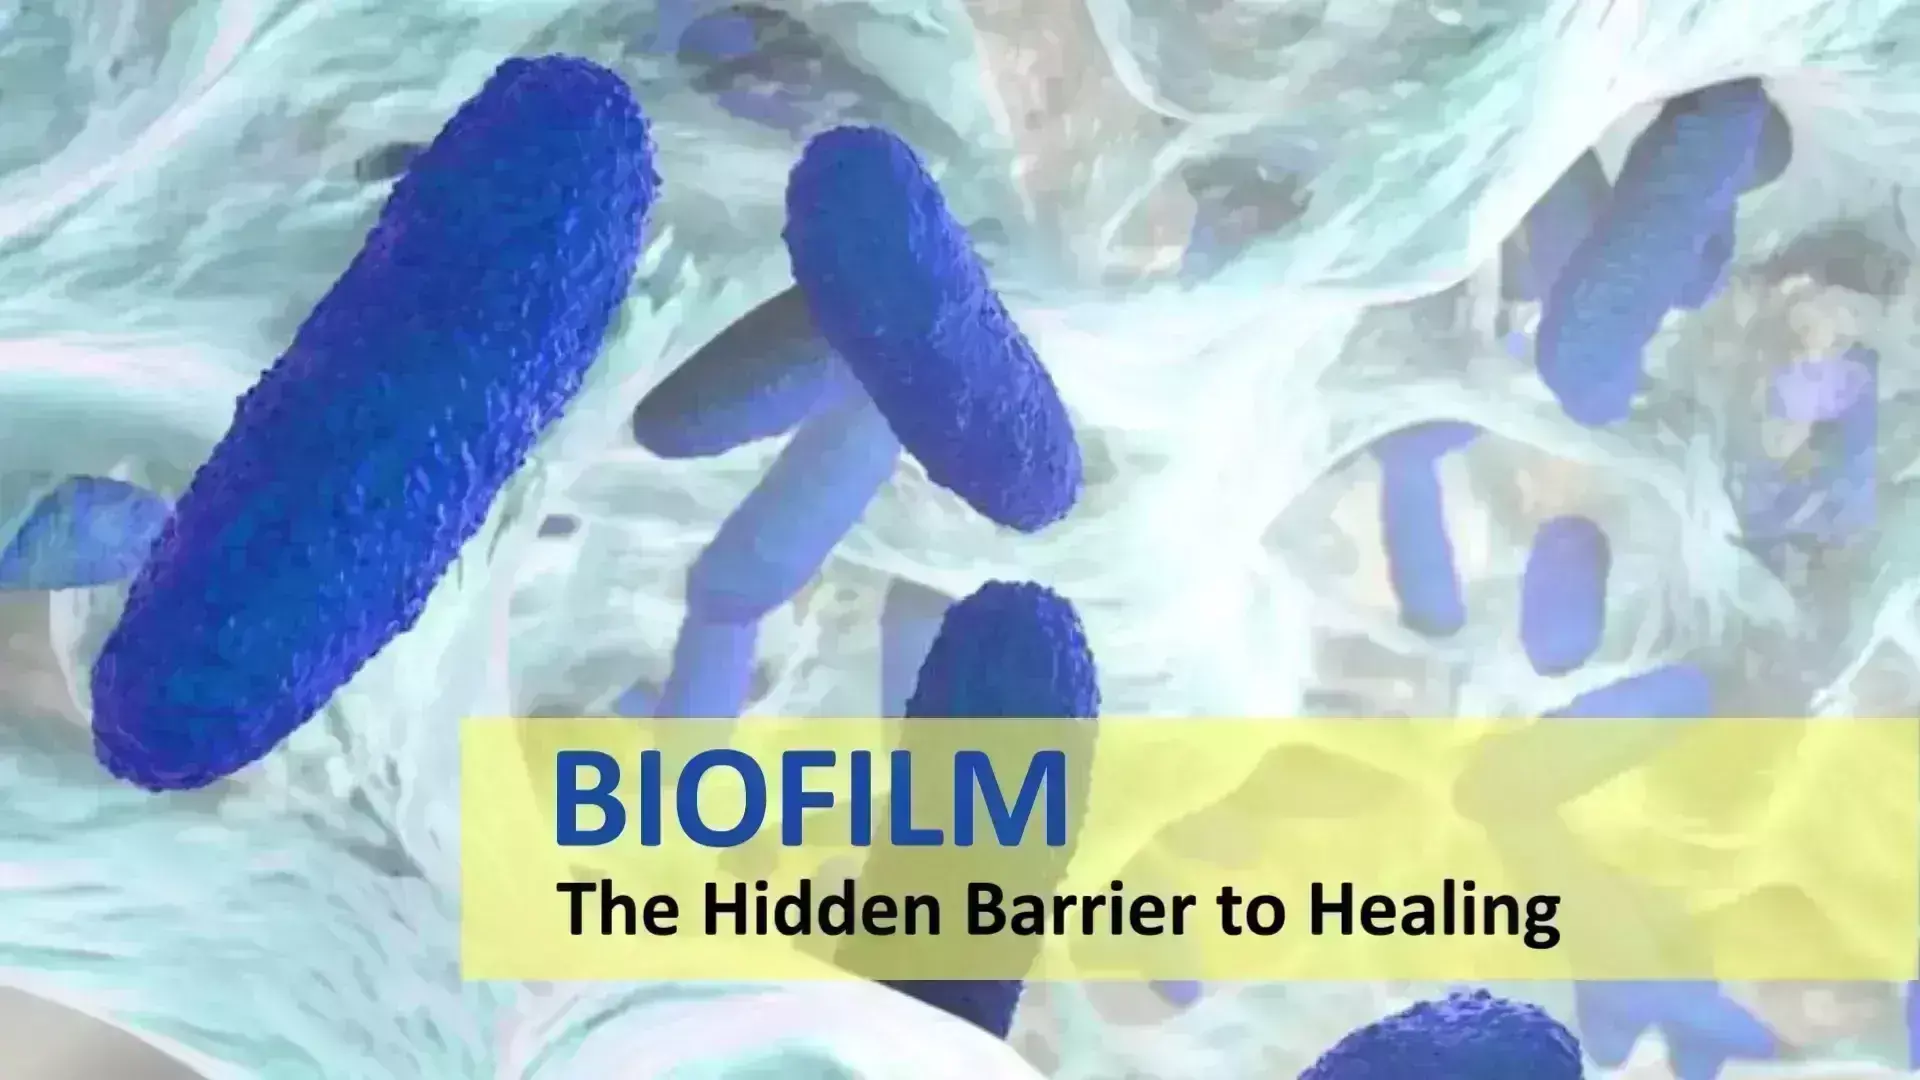 Biofilm- The hidden barrier to healing